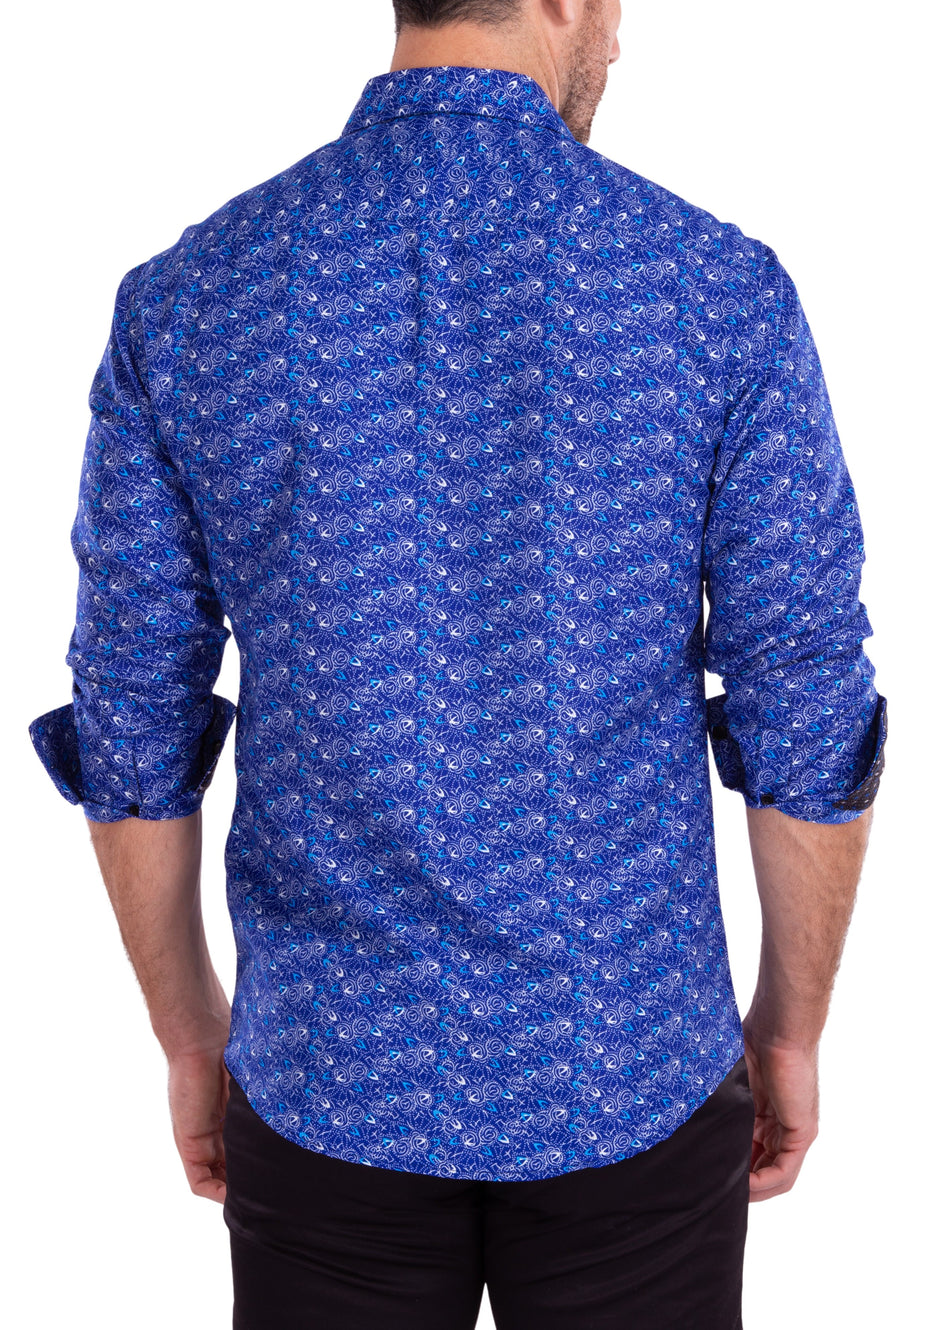 212349 - Royal Blue Long Sleeve Shirt